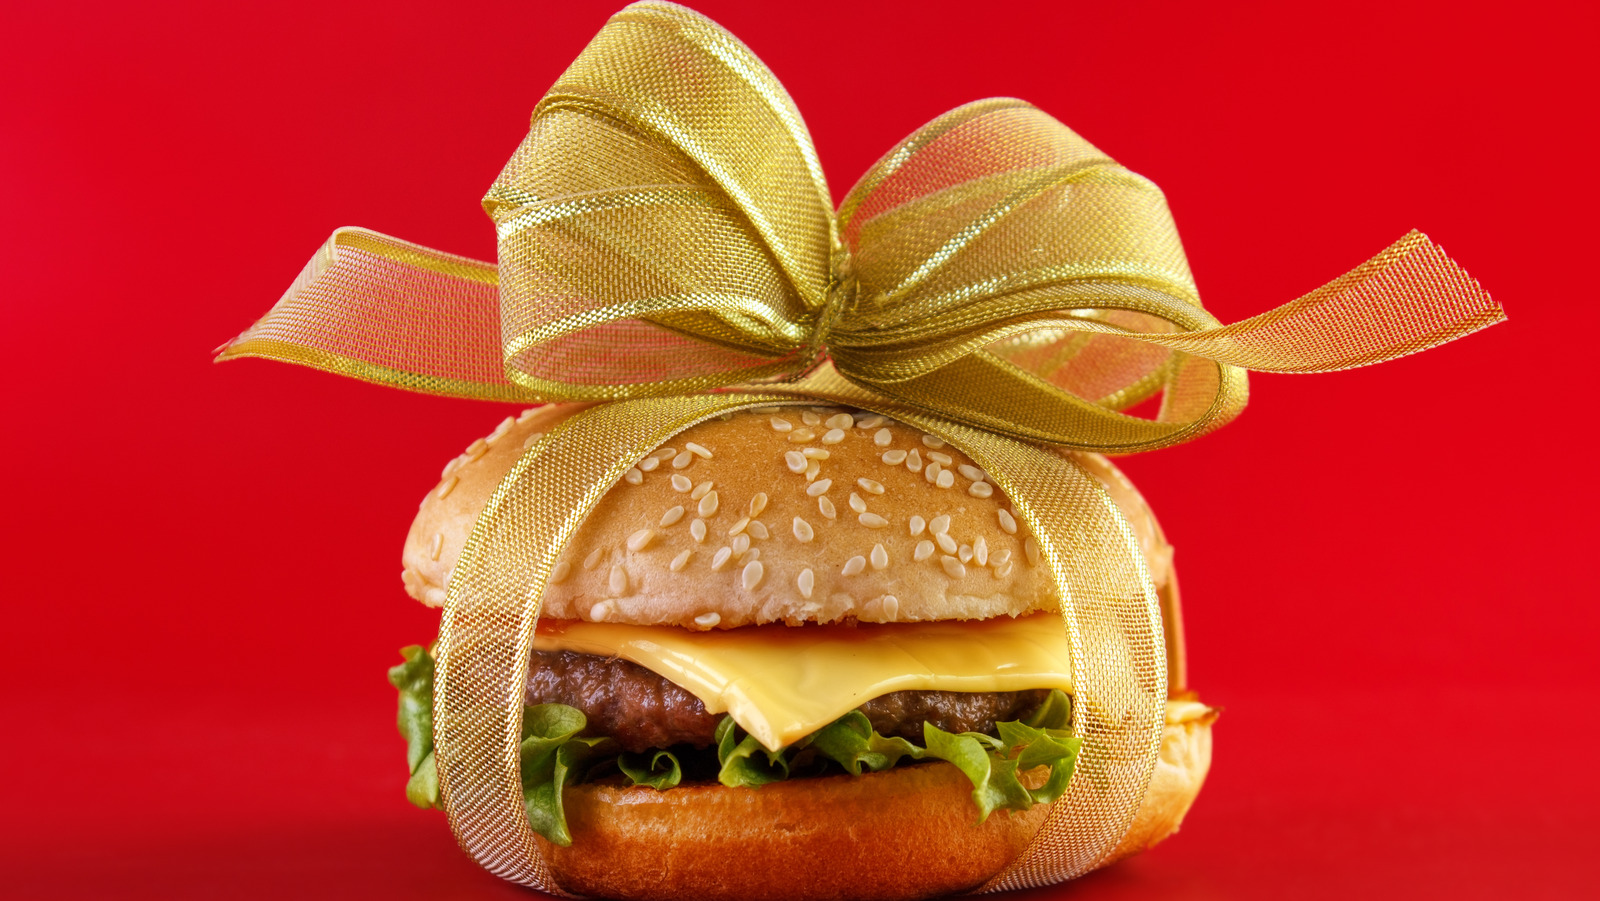 Fast Food Restaurants Celebrating The Holidays With Seasonal Menu Items